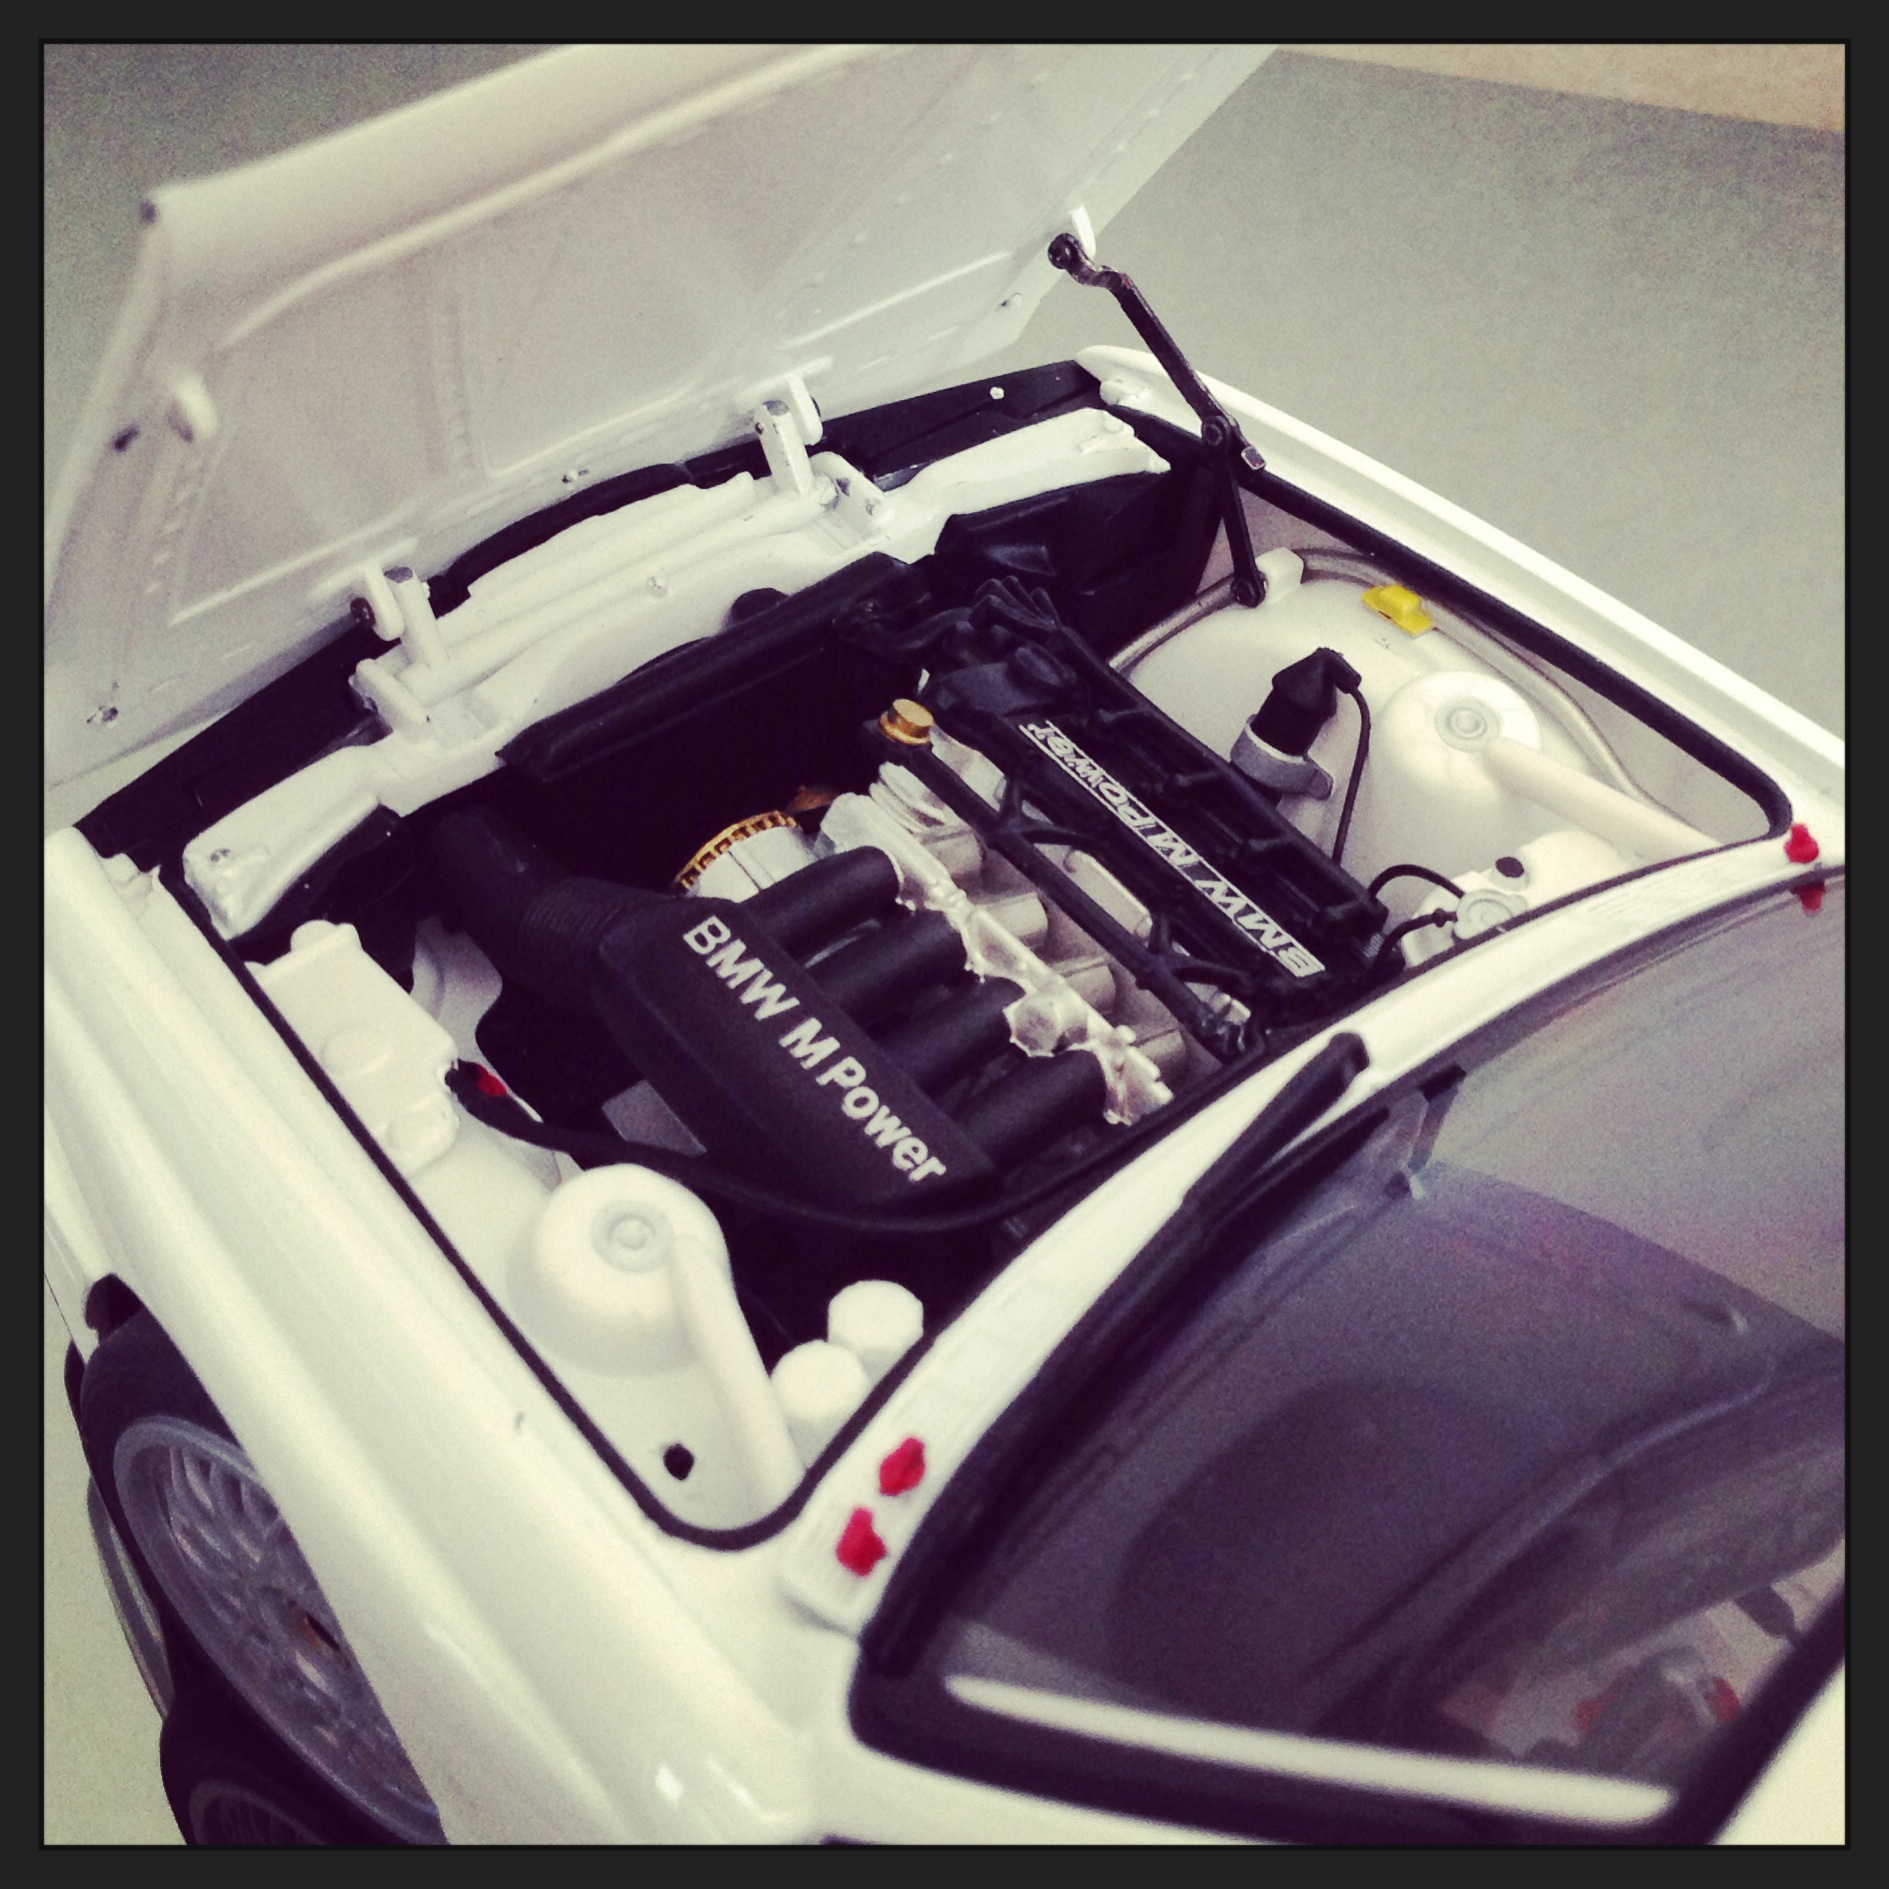 BMW M3 (E30) plain body version, white (autoart)